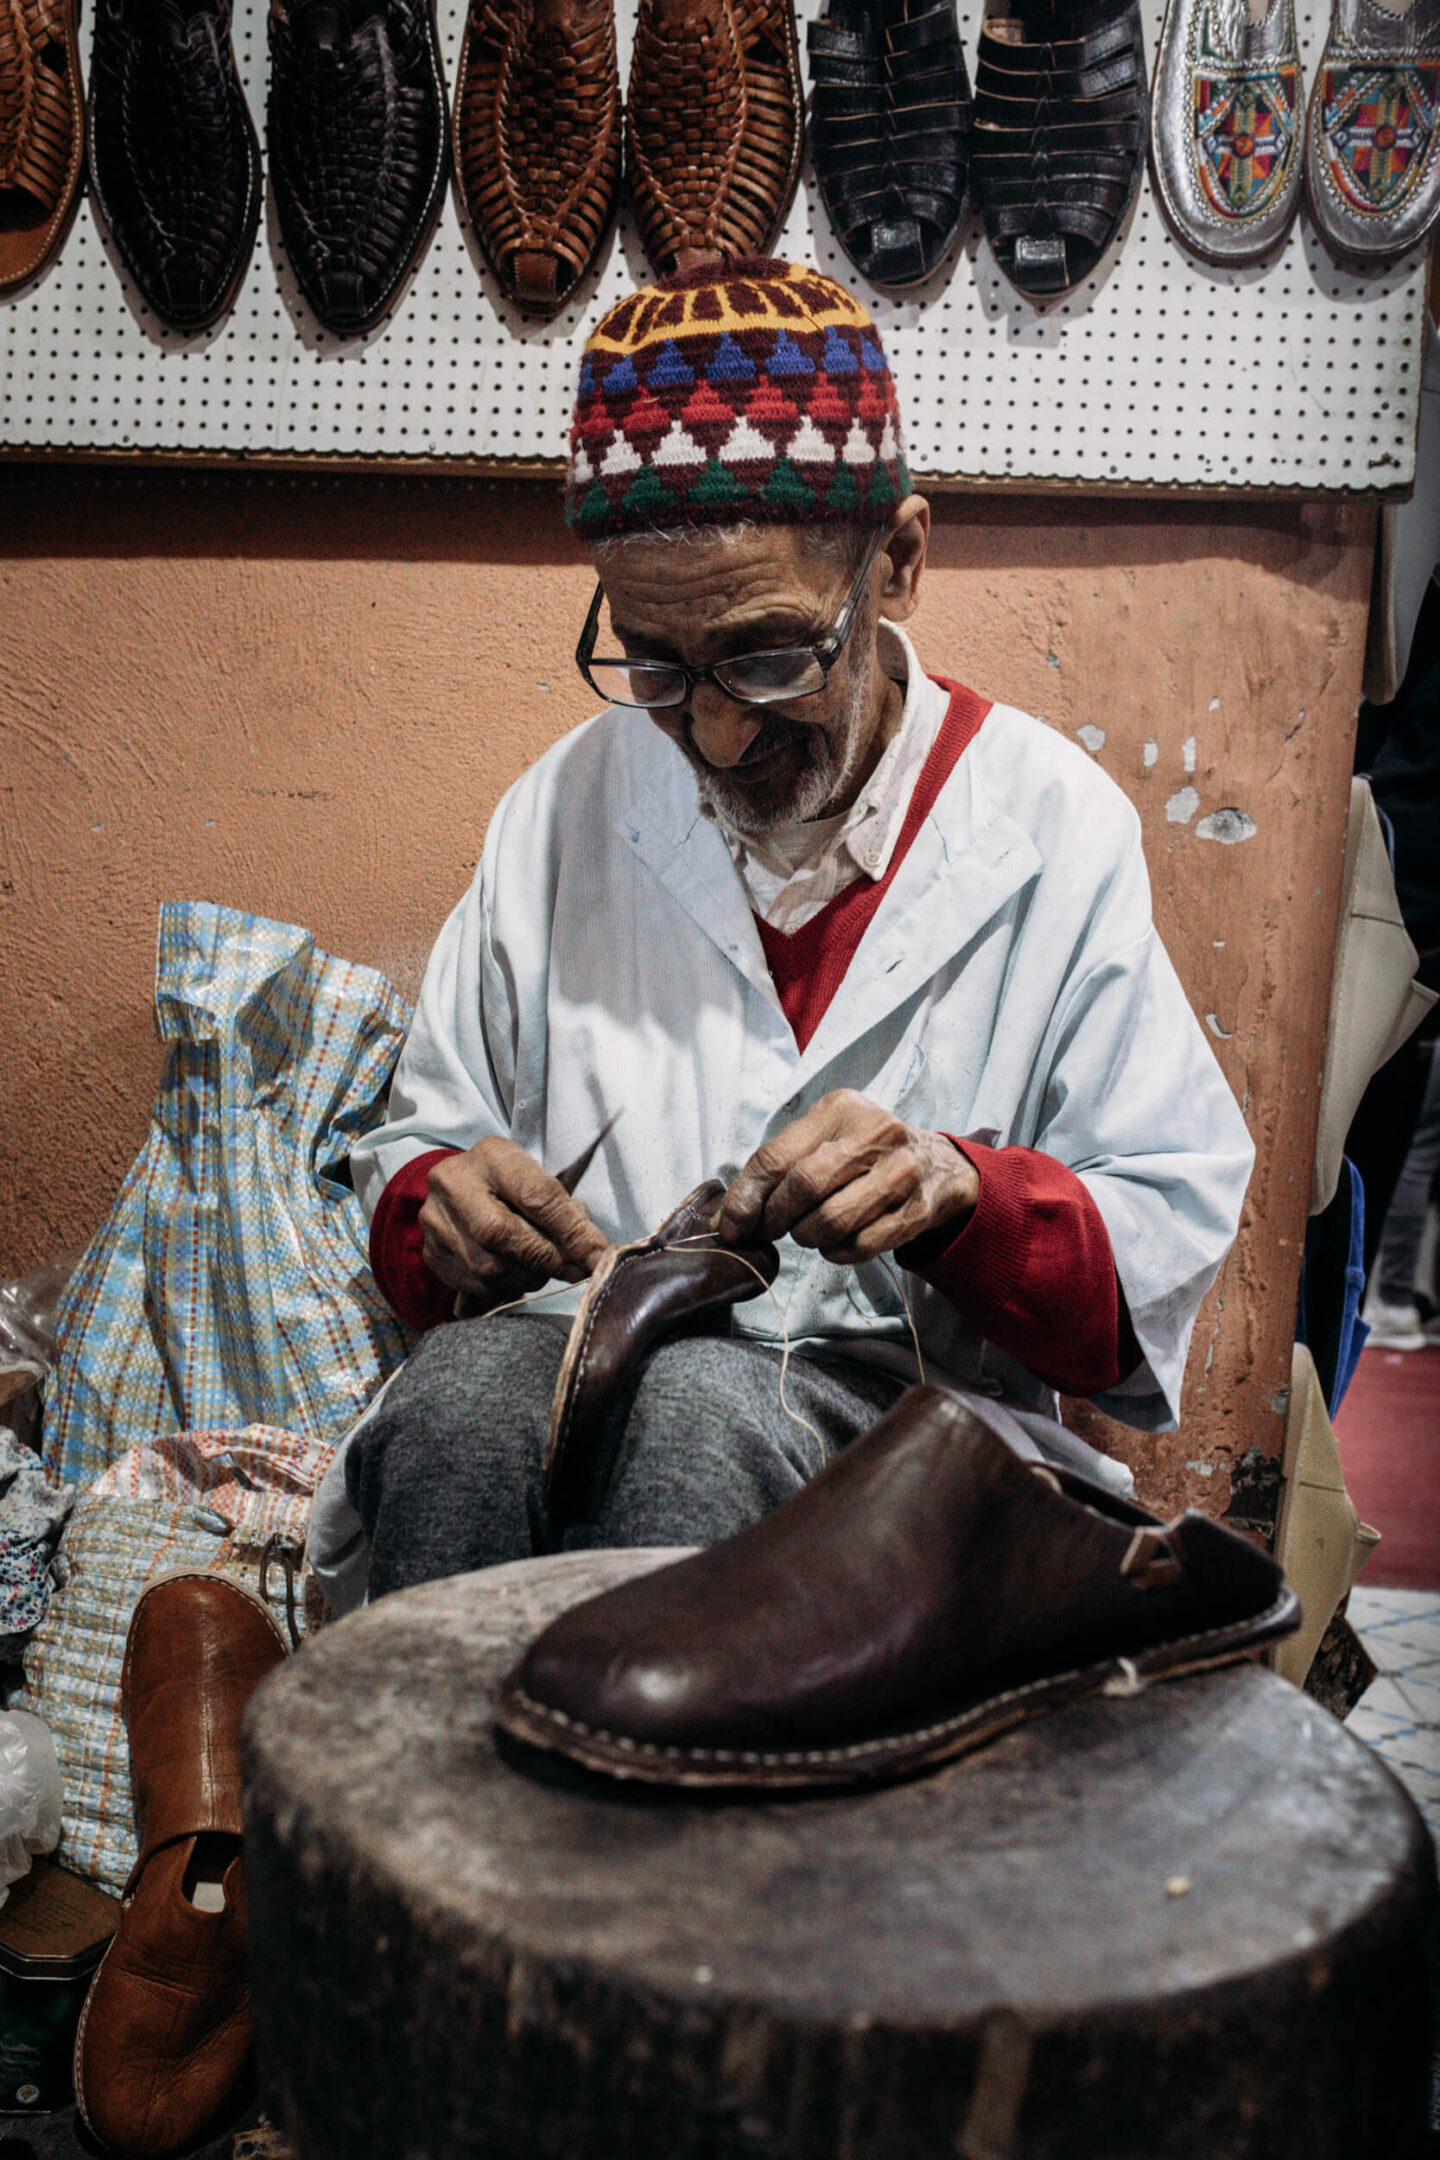 A man repairing shoes in the medina, Marrakech 